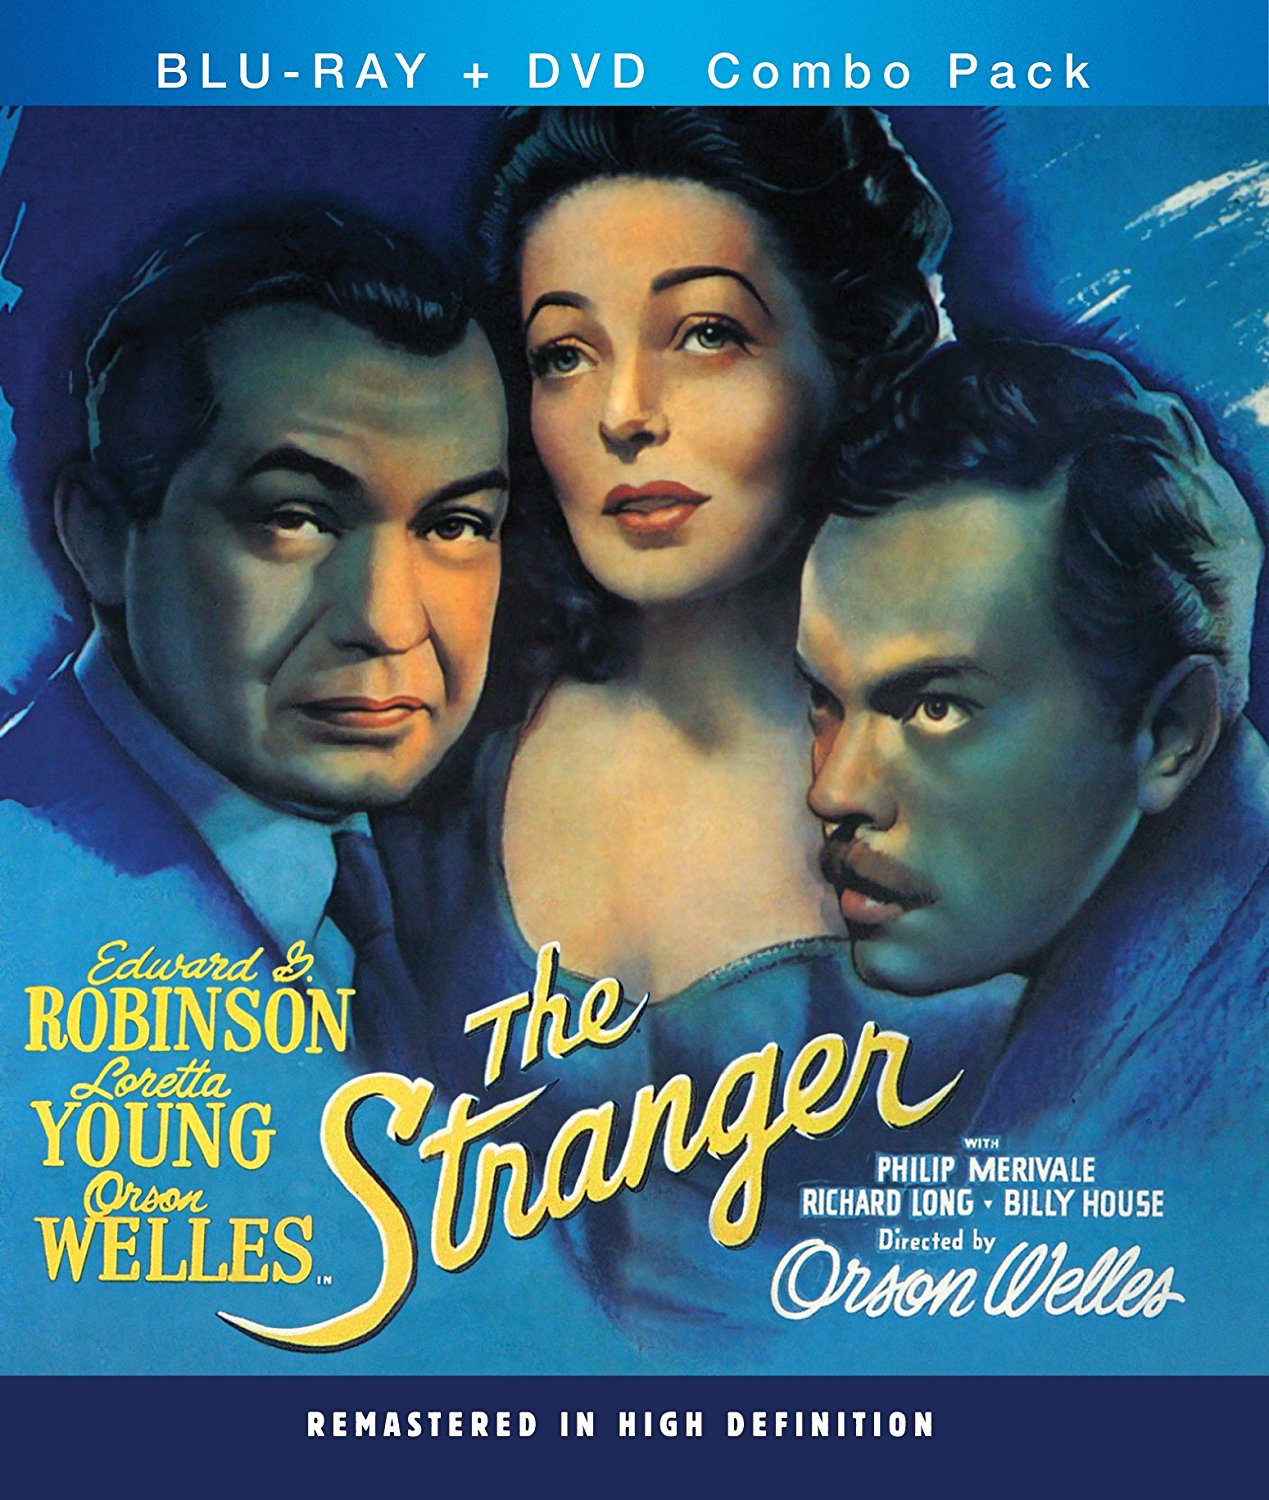 The Stranger (1946) starring Orson Welles, Edward G. Robinson, Loretta Young